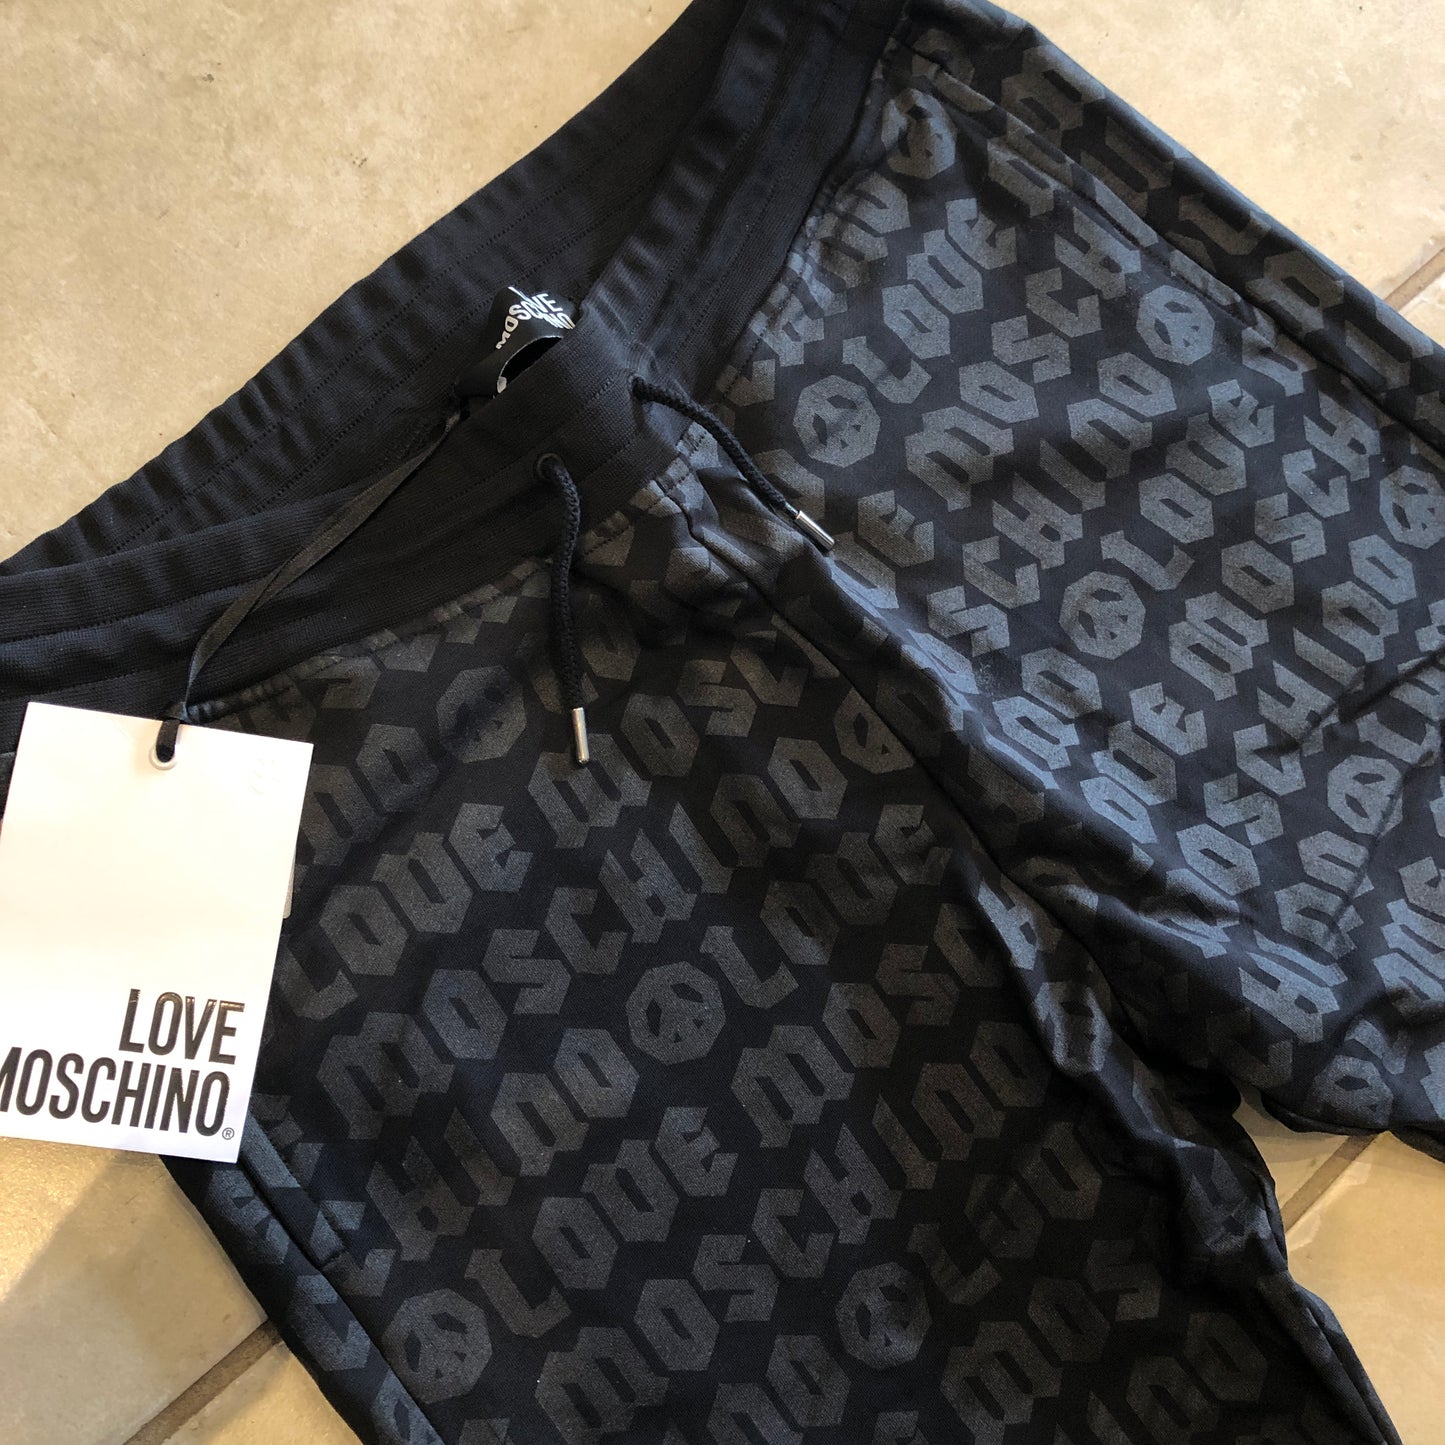 Moschino Love Tour Joggers Black size XL